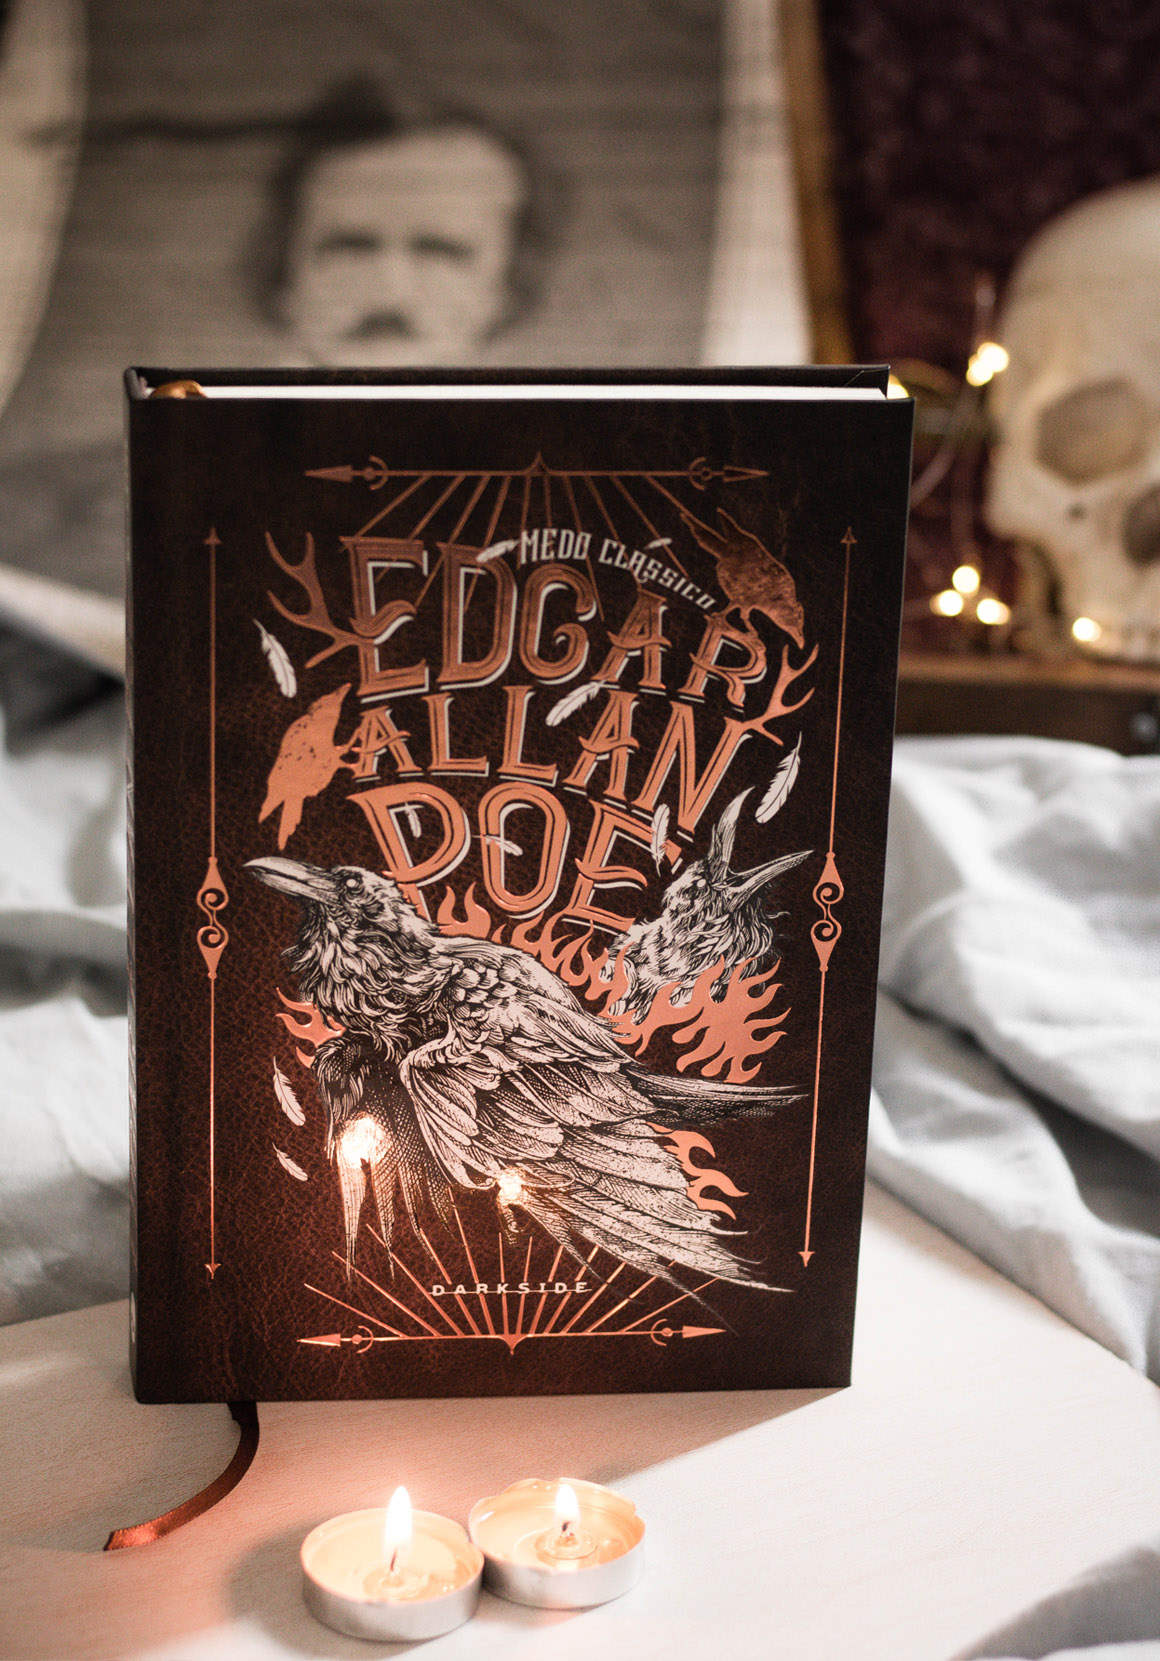 Edgar Allan Poe Darkside Books Medo Clássico Vol. 1